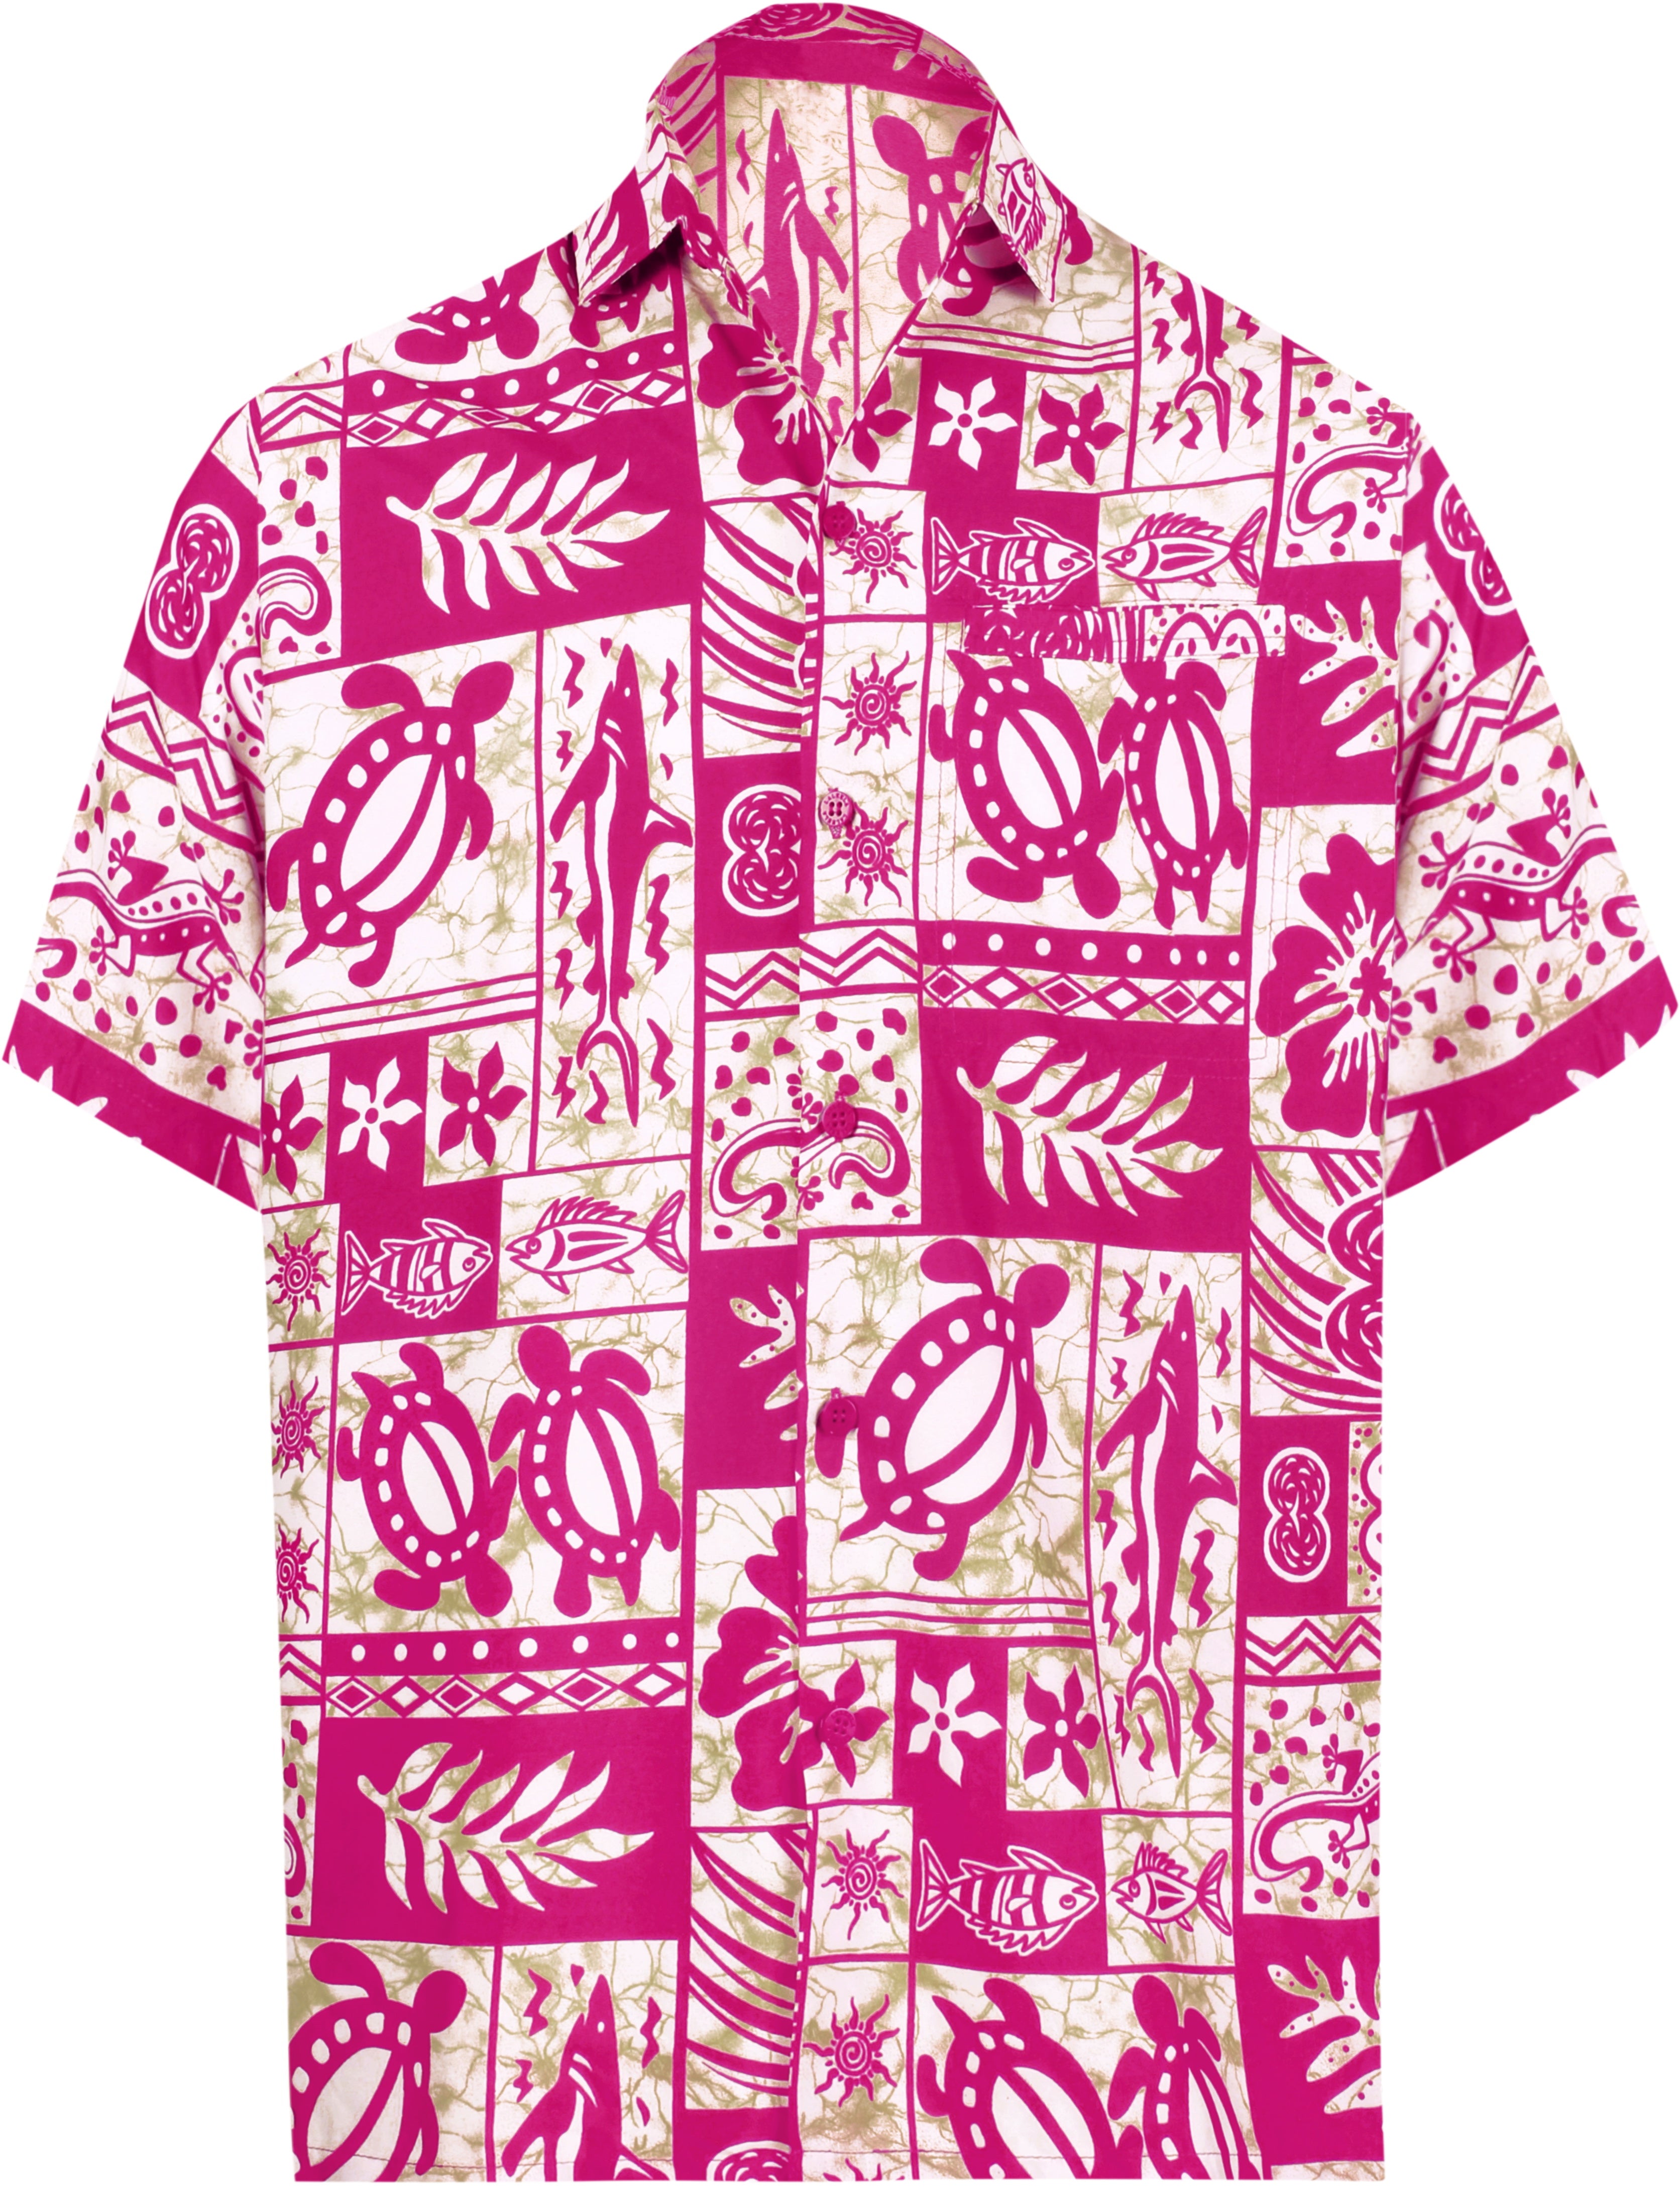  Breast Cancer Awareness Tropical Hawaiian Shirt